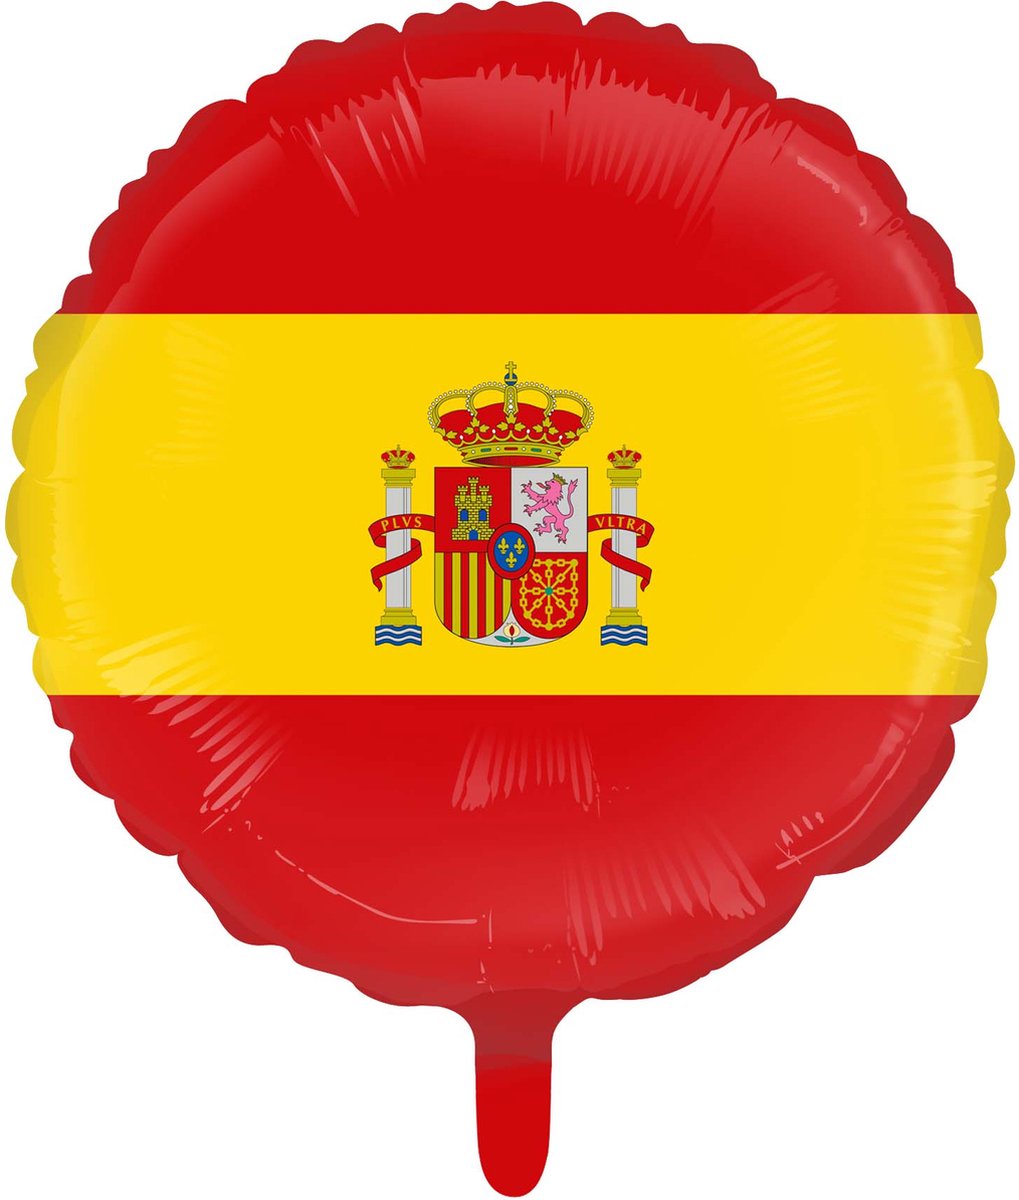 3x Folieballon Spanje 18